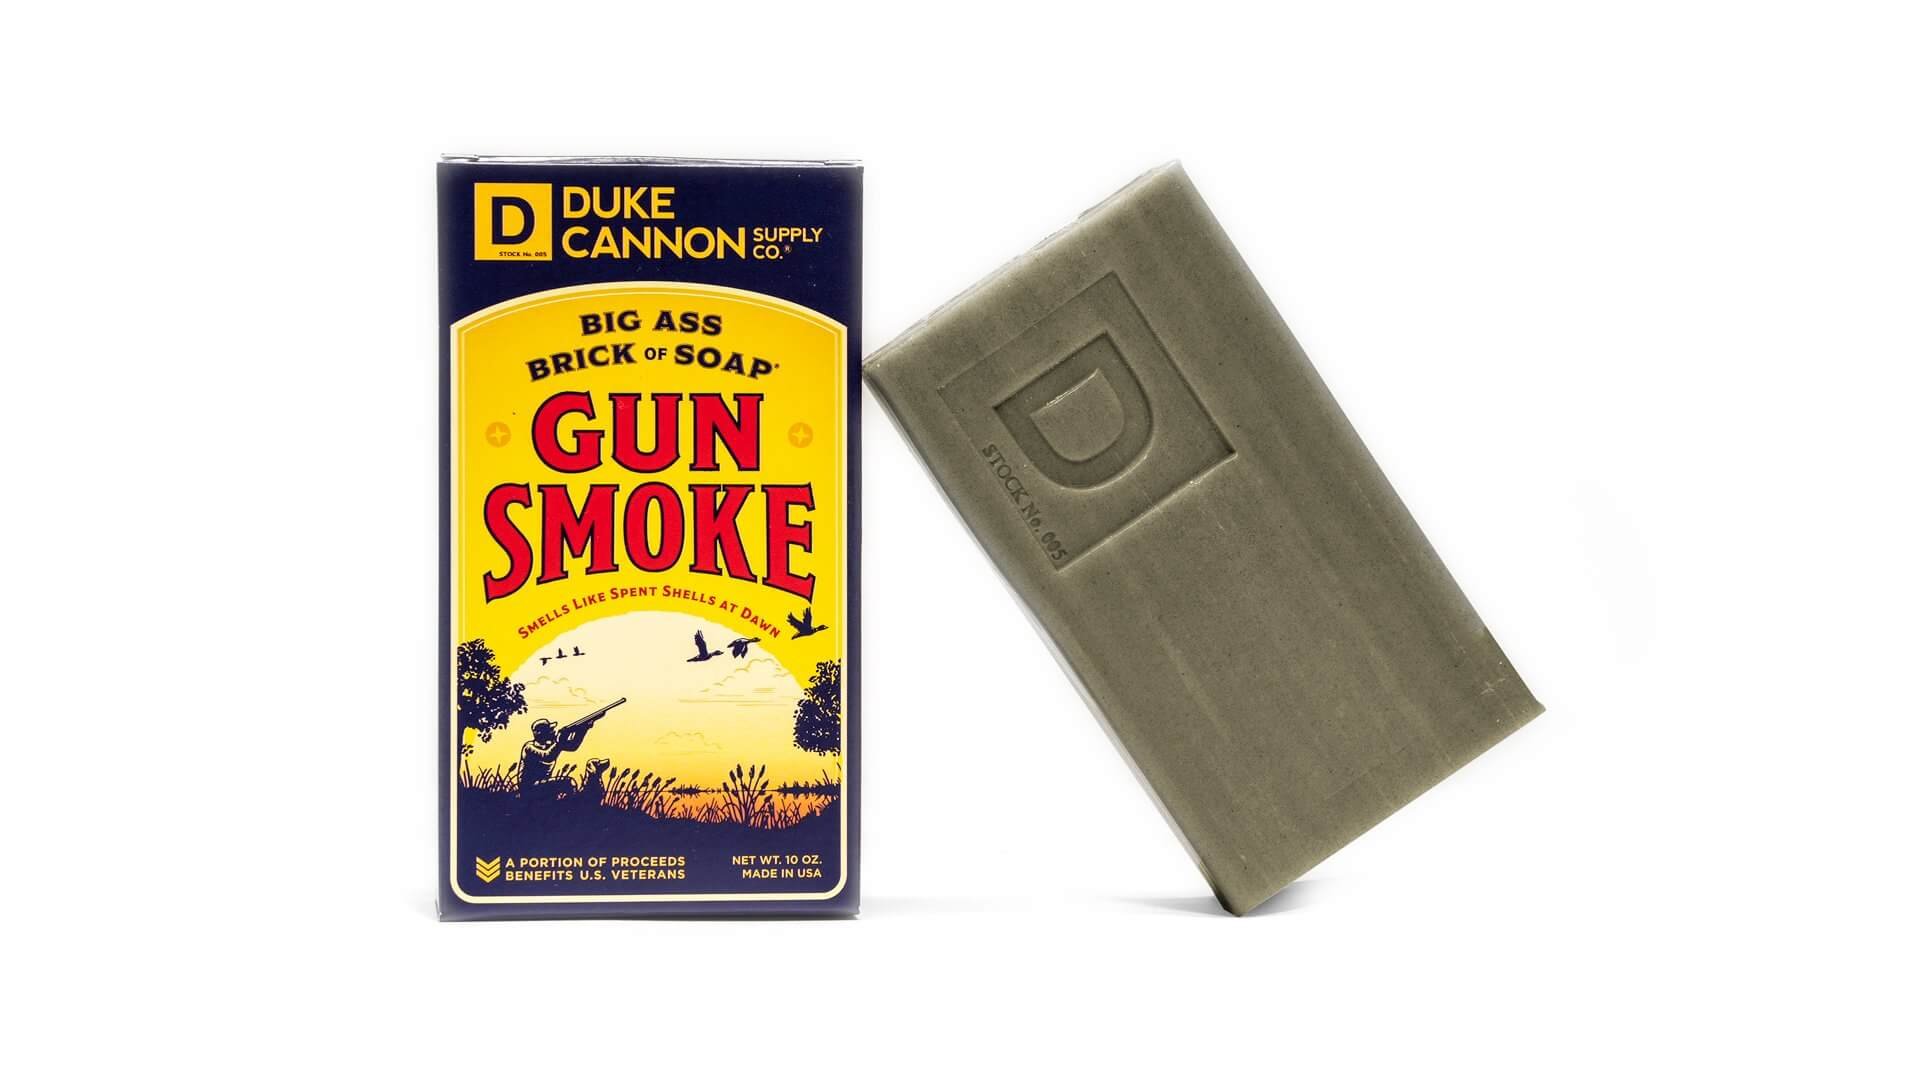 Duke Cannon Big Ass brick of Soap Gun Smoke, Sbe